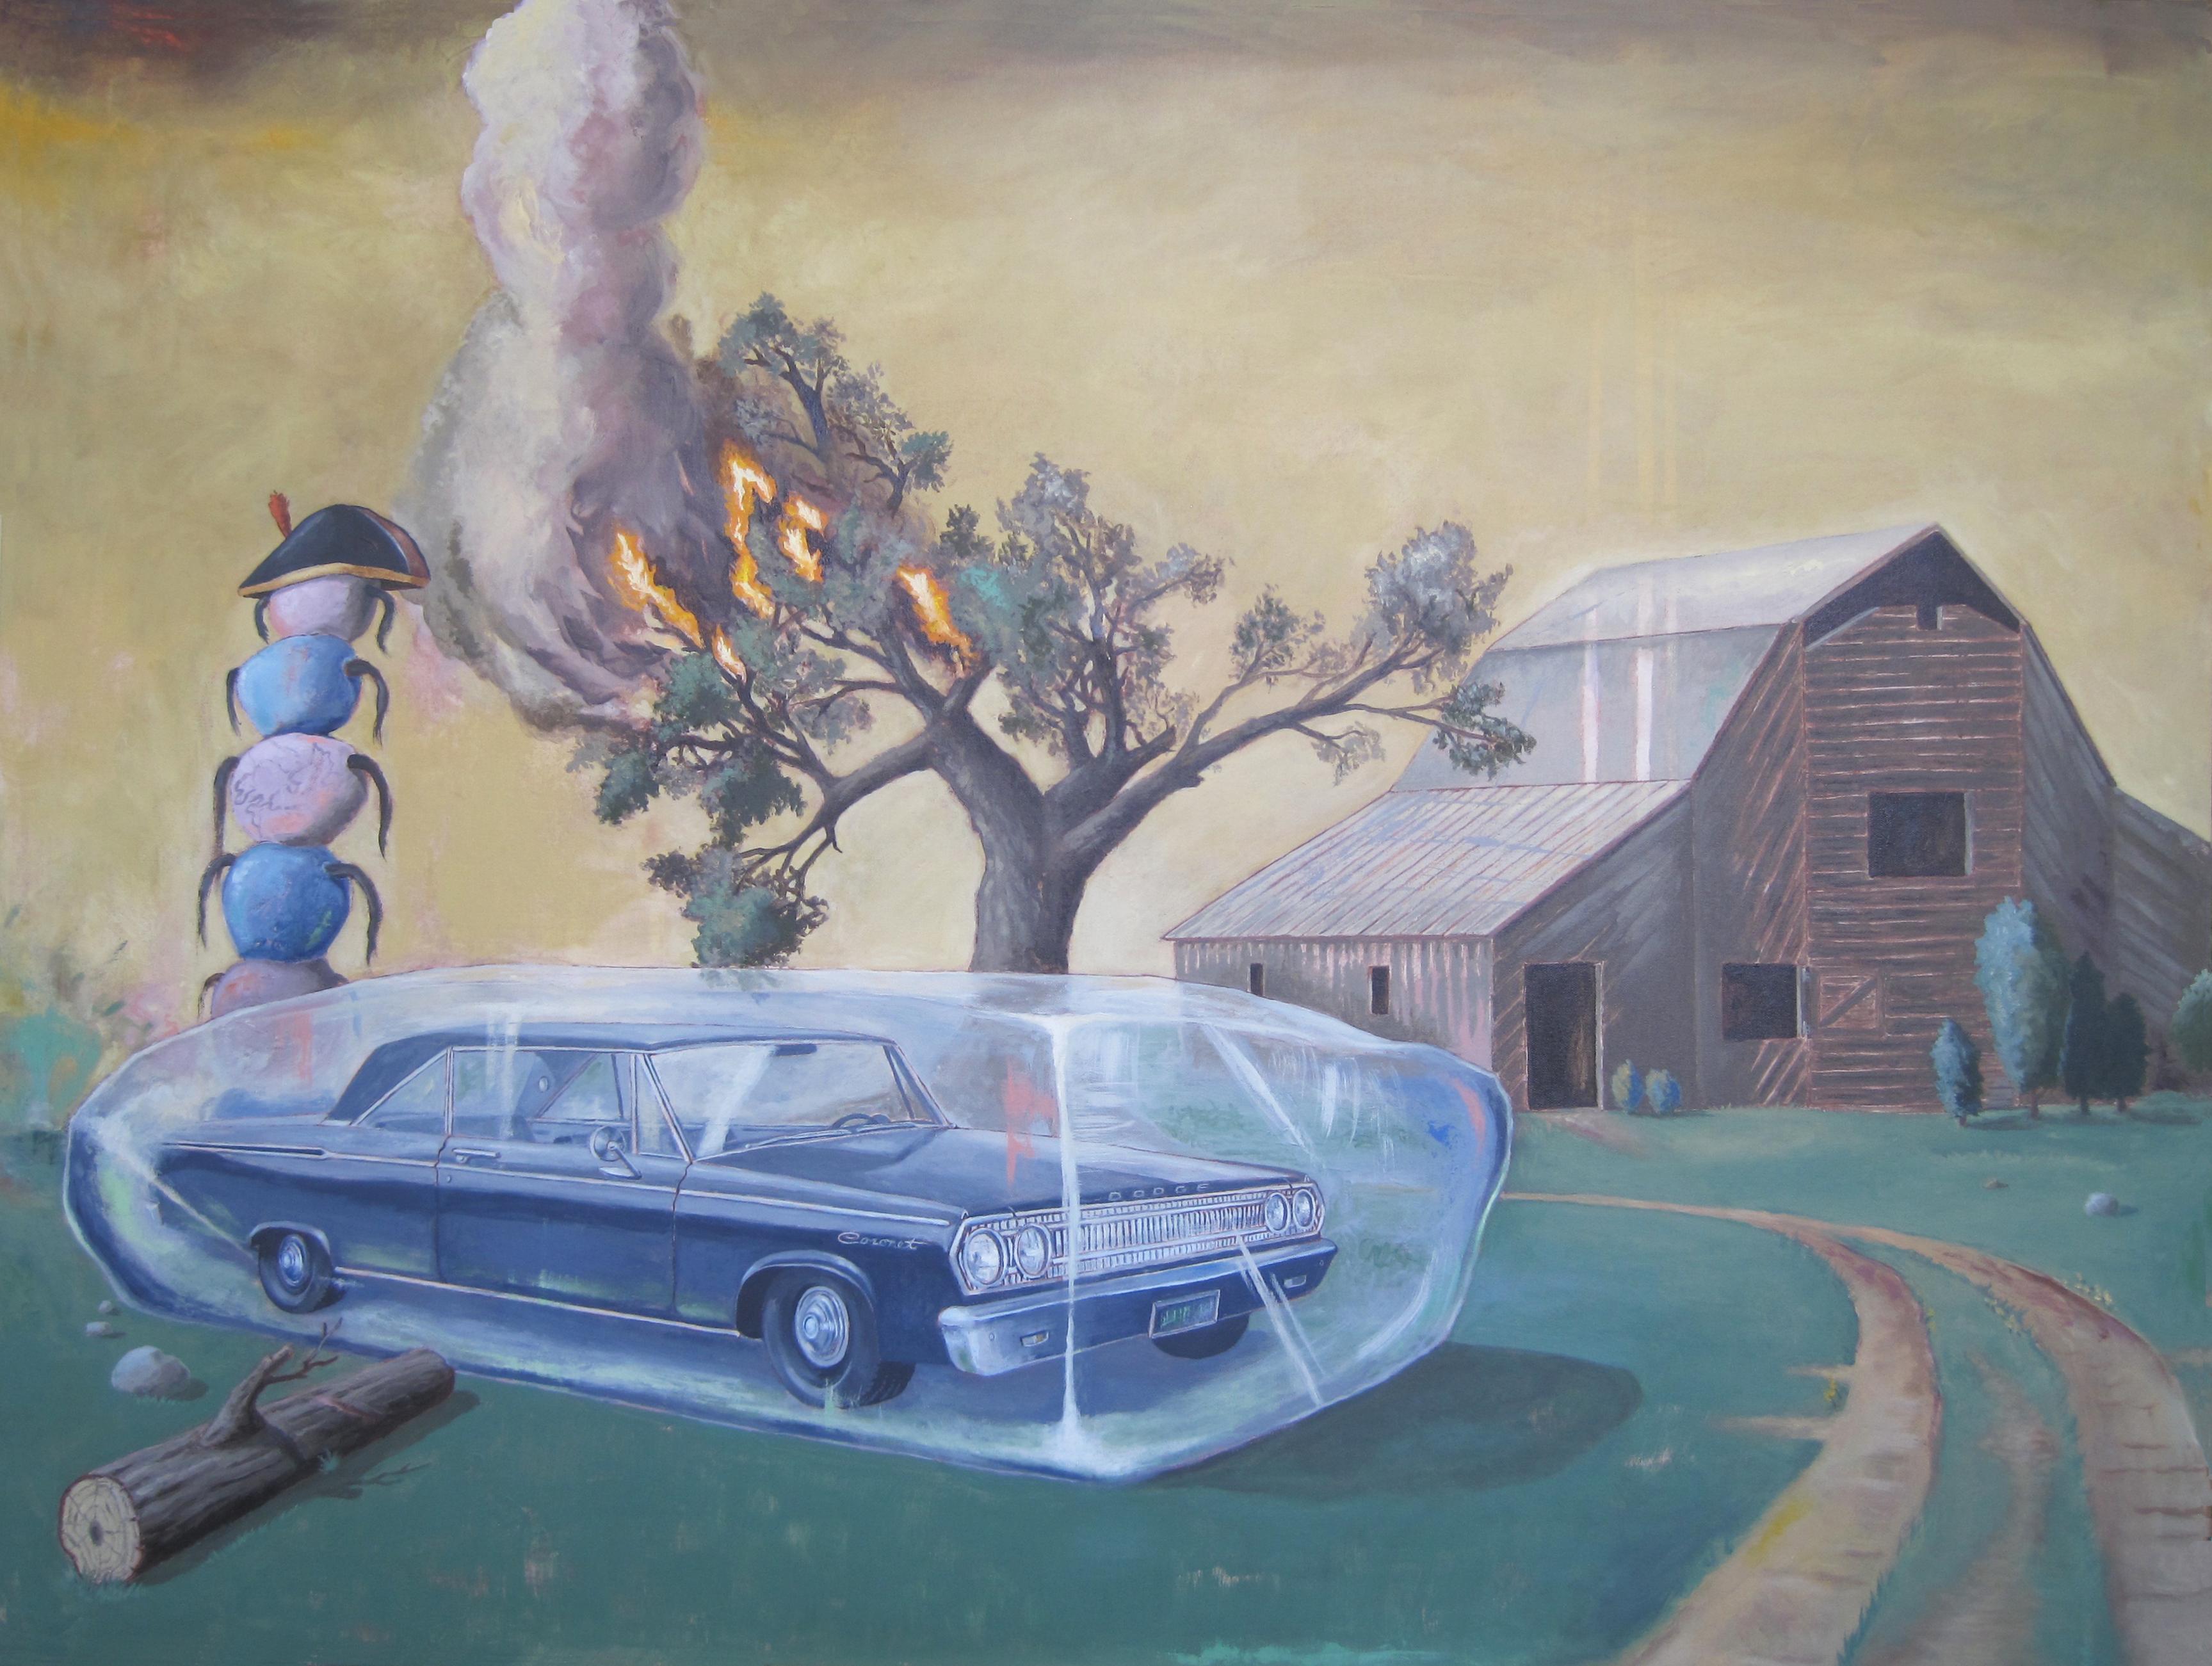 Tony Geiger Still-Life Painting - "Coronet Sunset", painting, surrealist dream, alien, fire, ice, farm, sci-fi